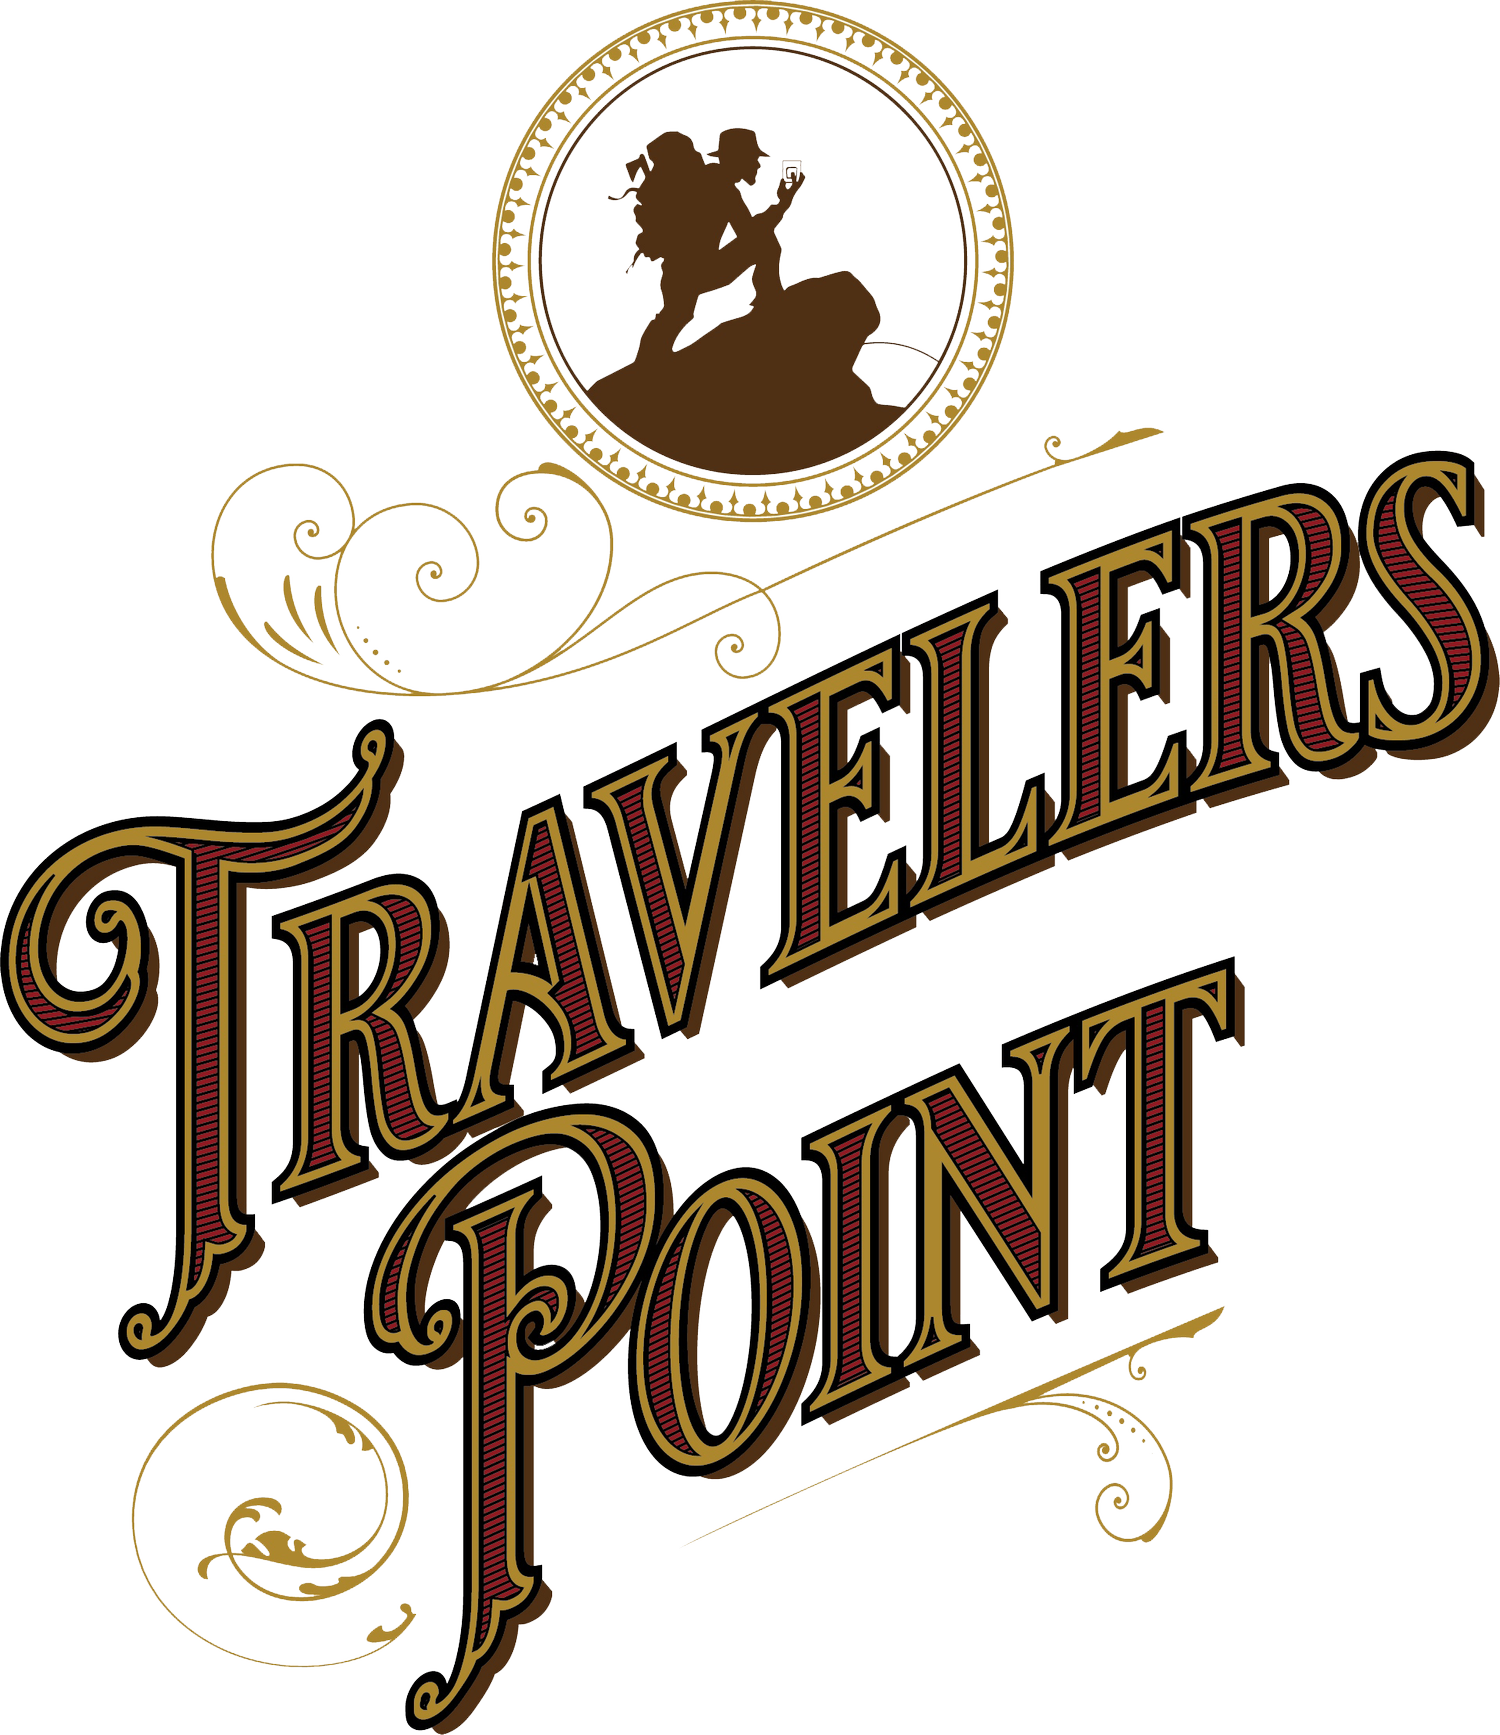 Travelers Point Distillery